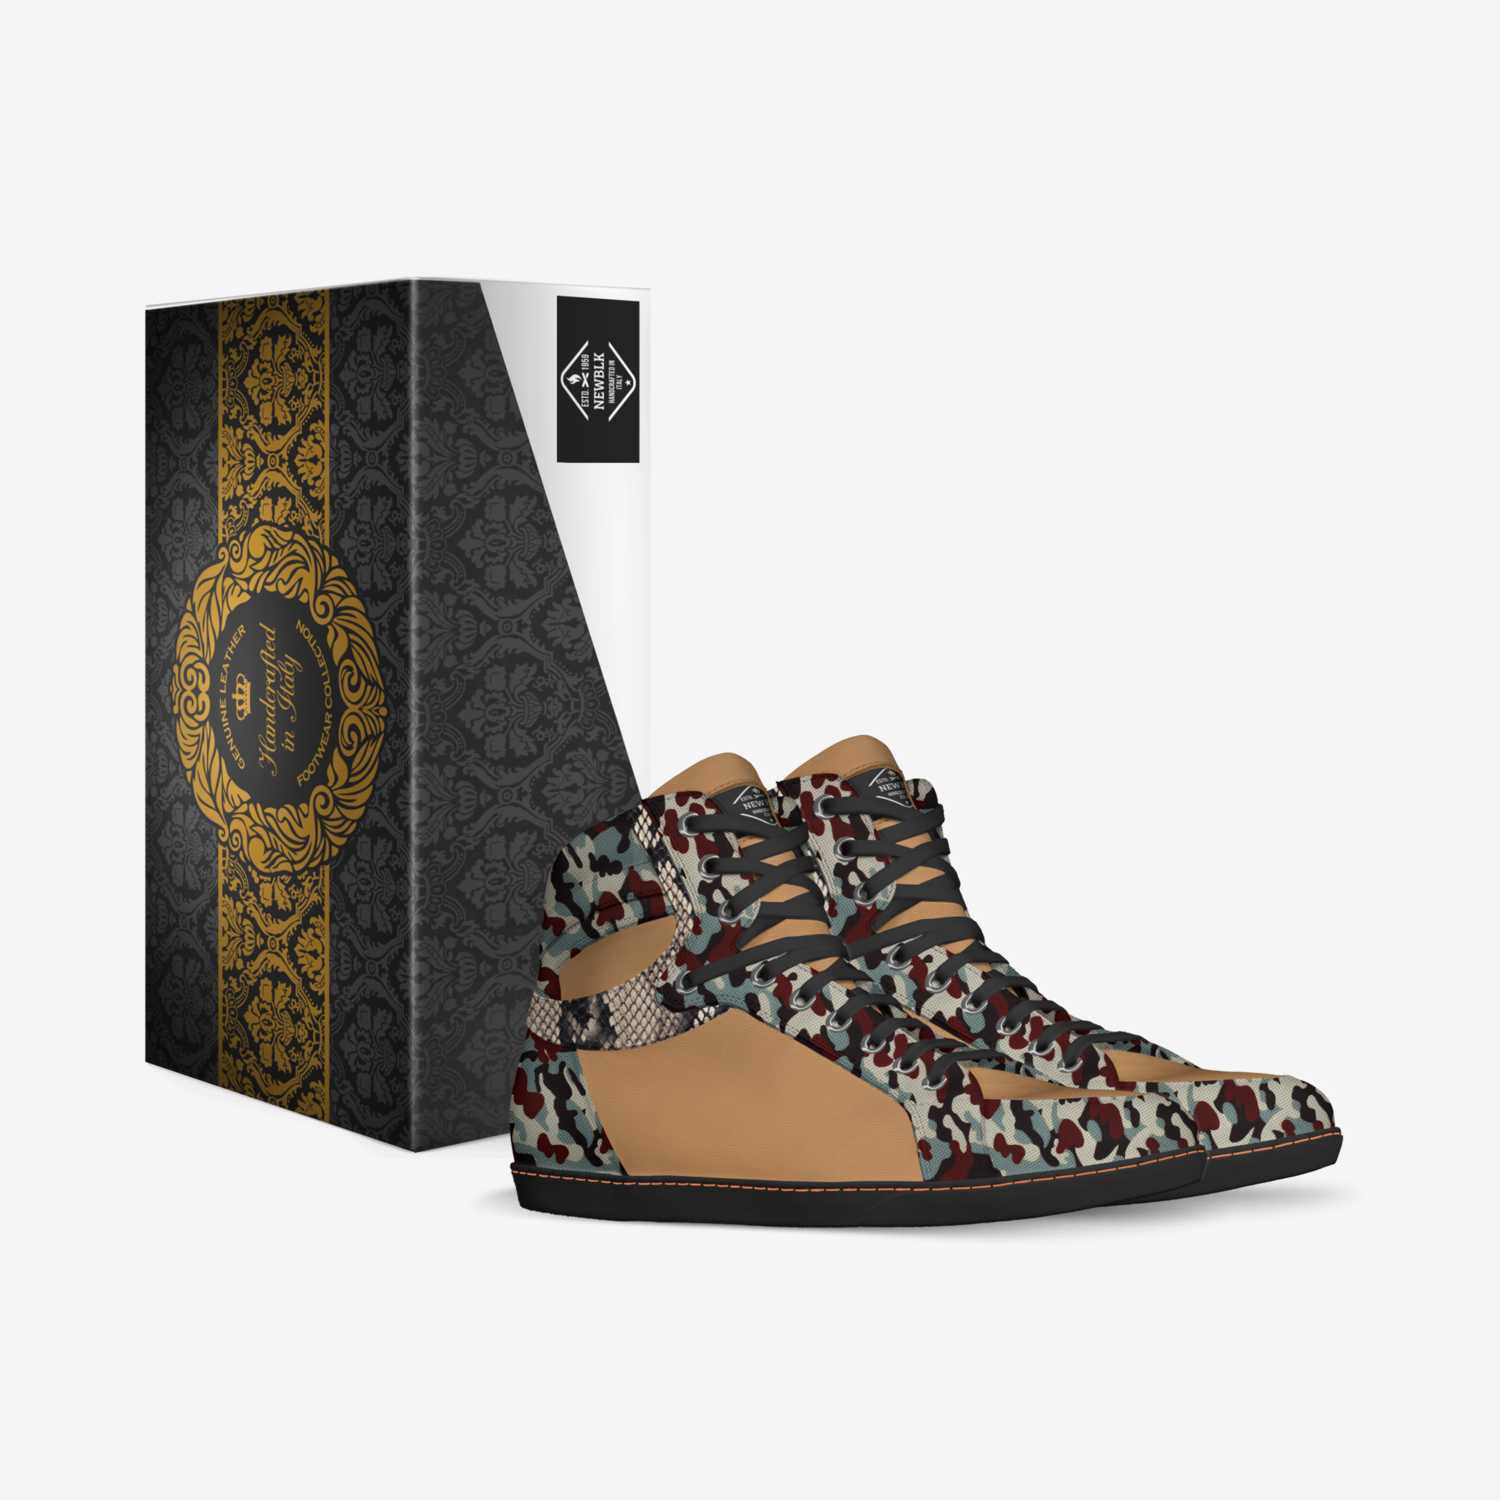 NEWBLK custom made in Italy shoes by Jahi Cudjoe | Box view